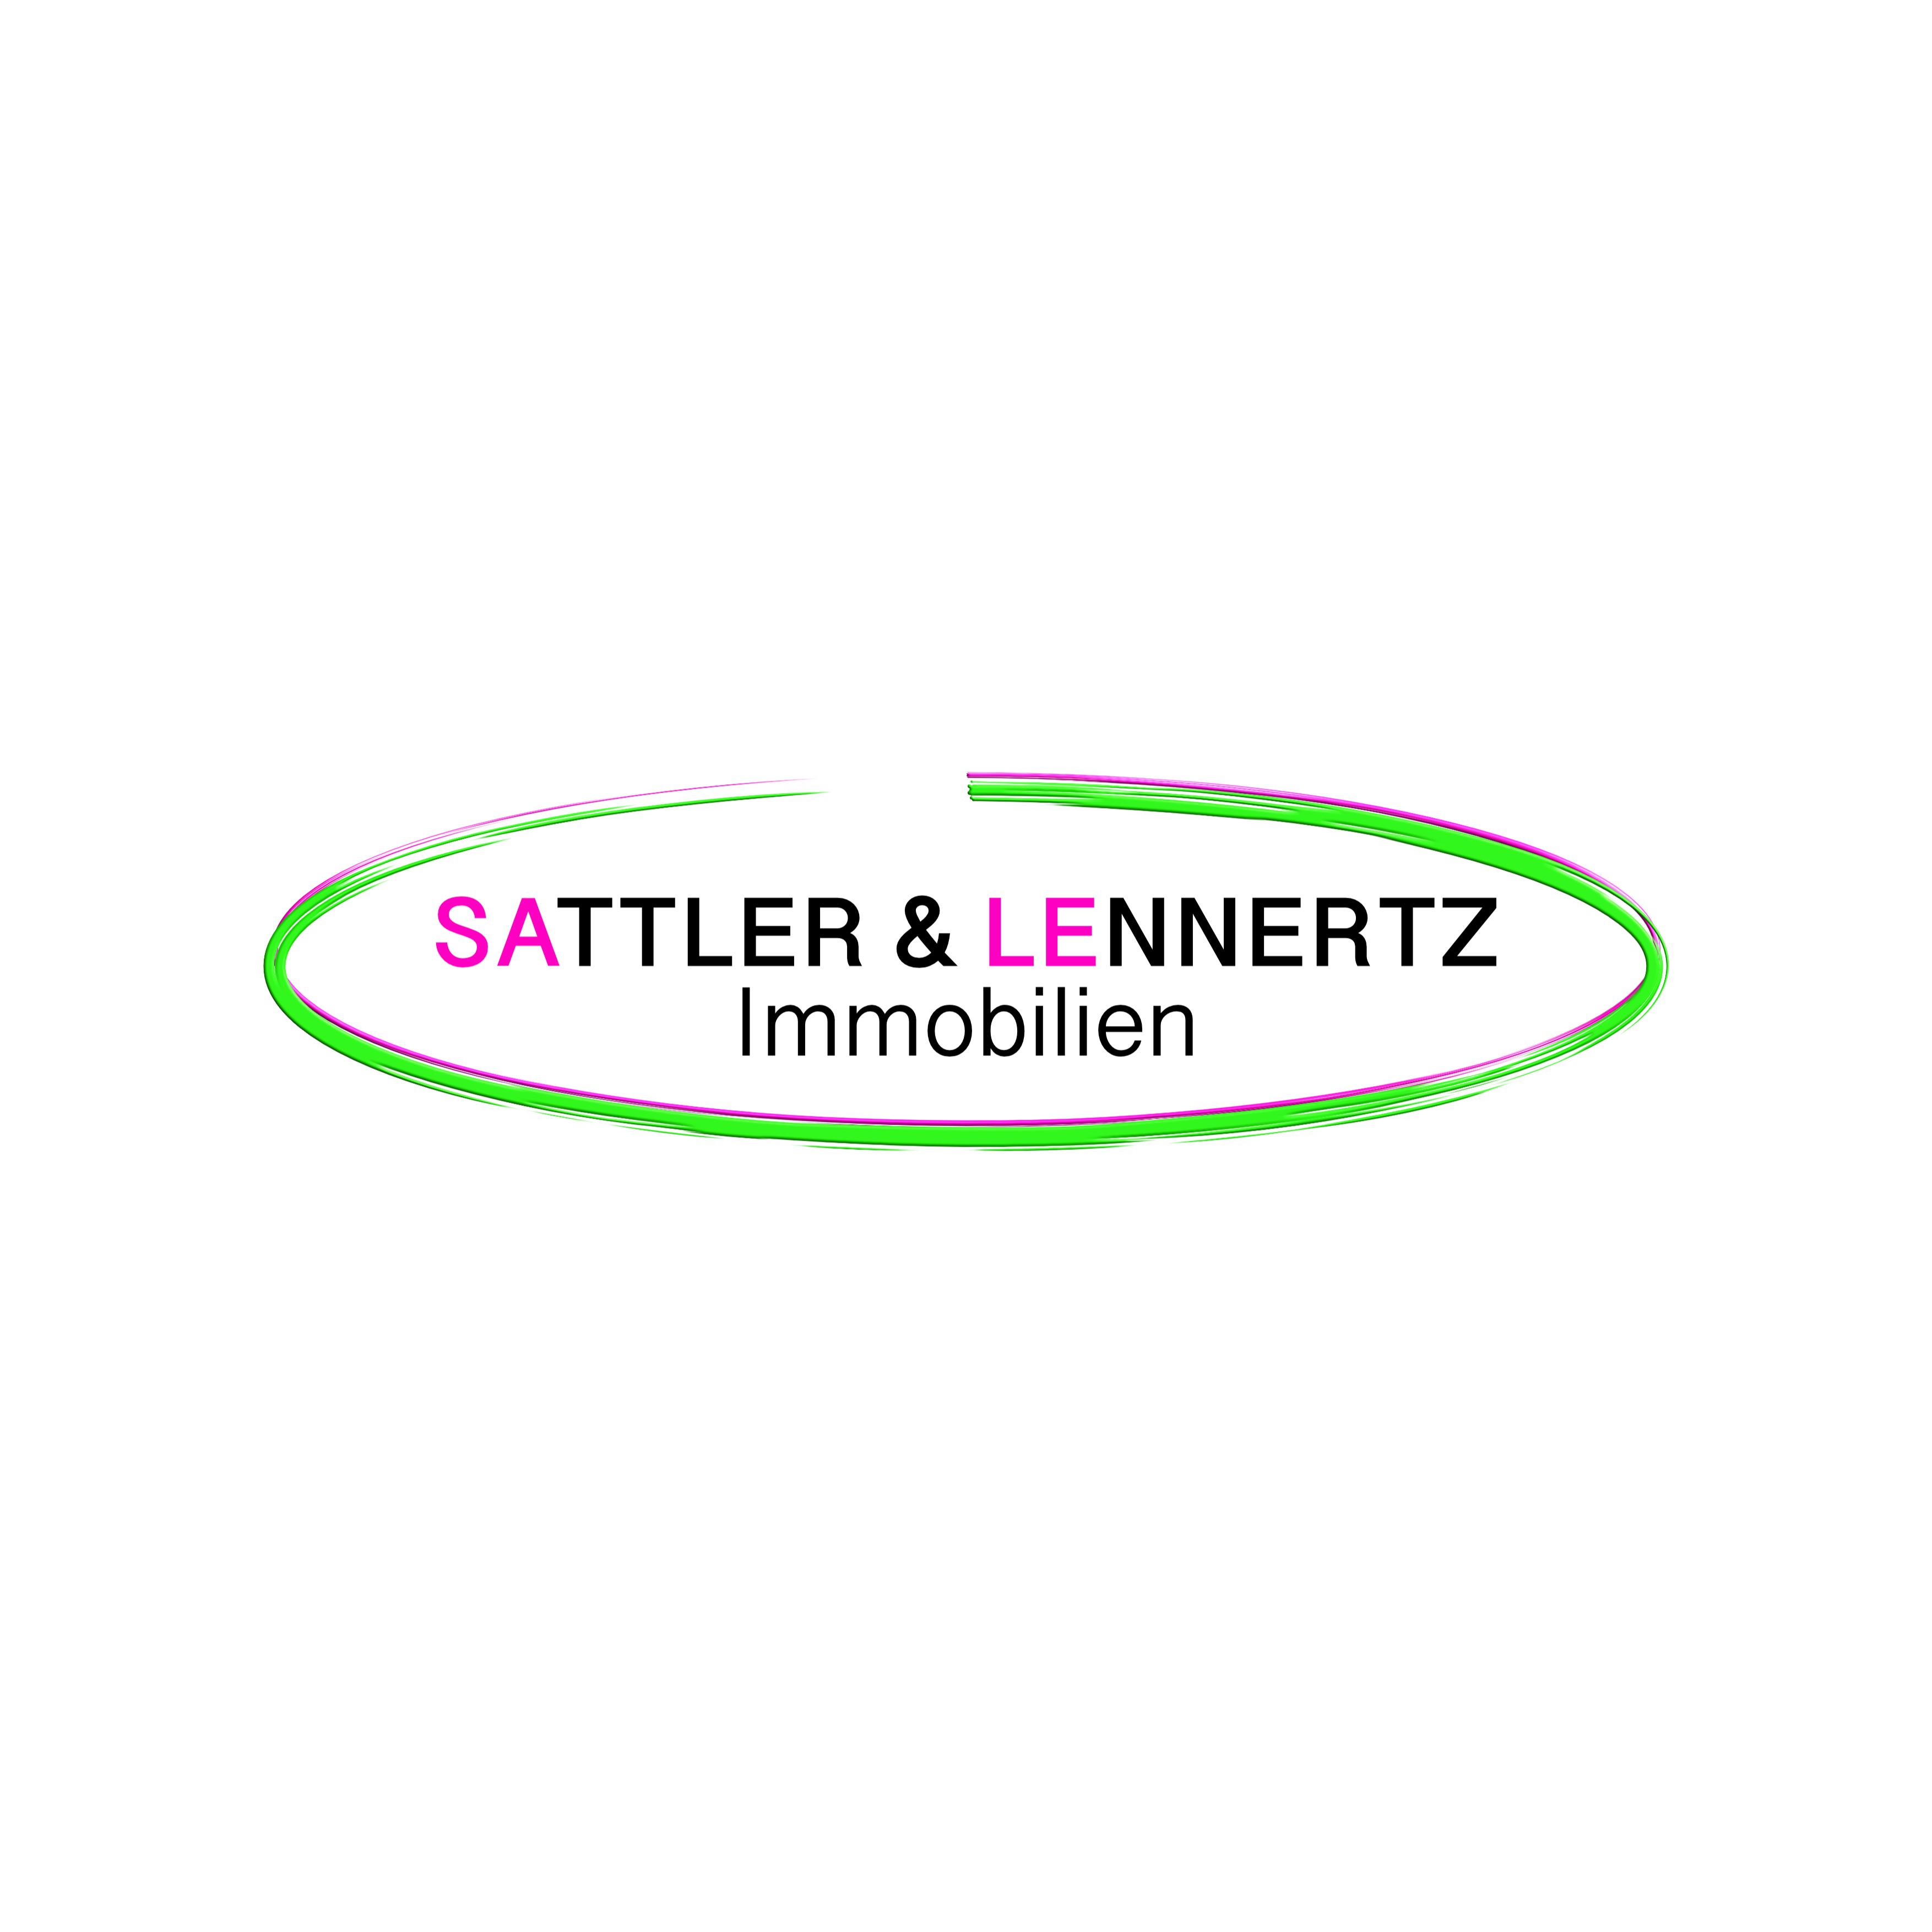 Sattler & Lennertz Immobilien GbR in Schwalmtal am Niederrhein - Logo